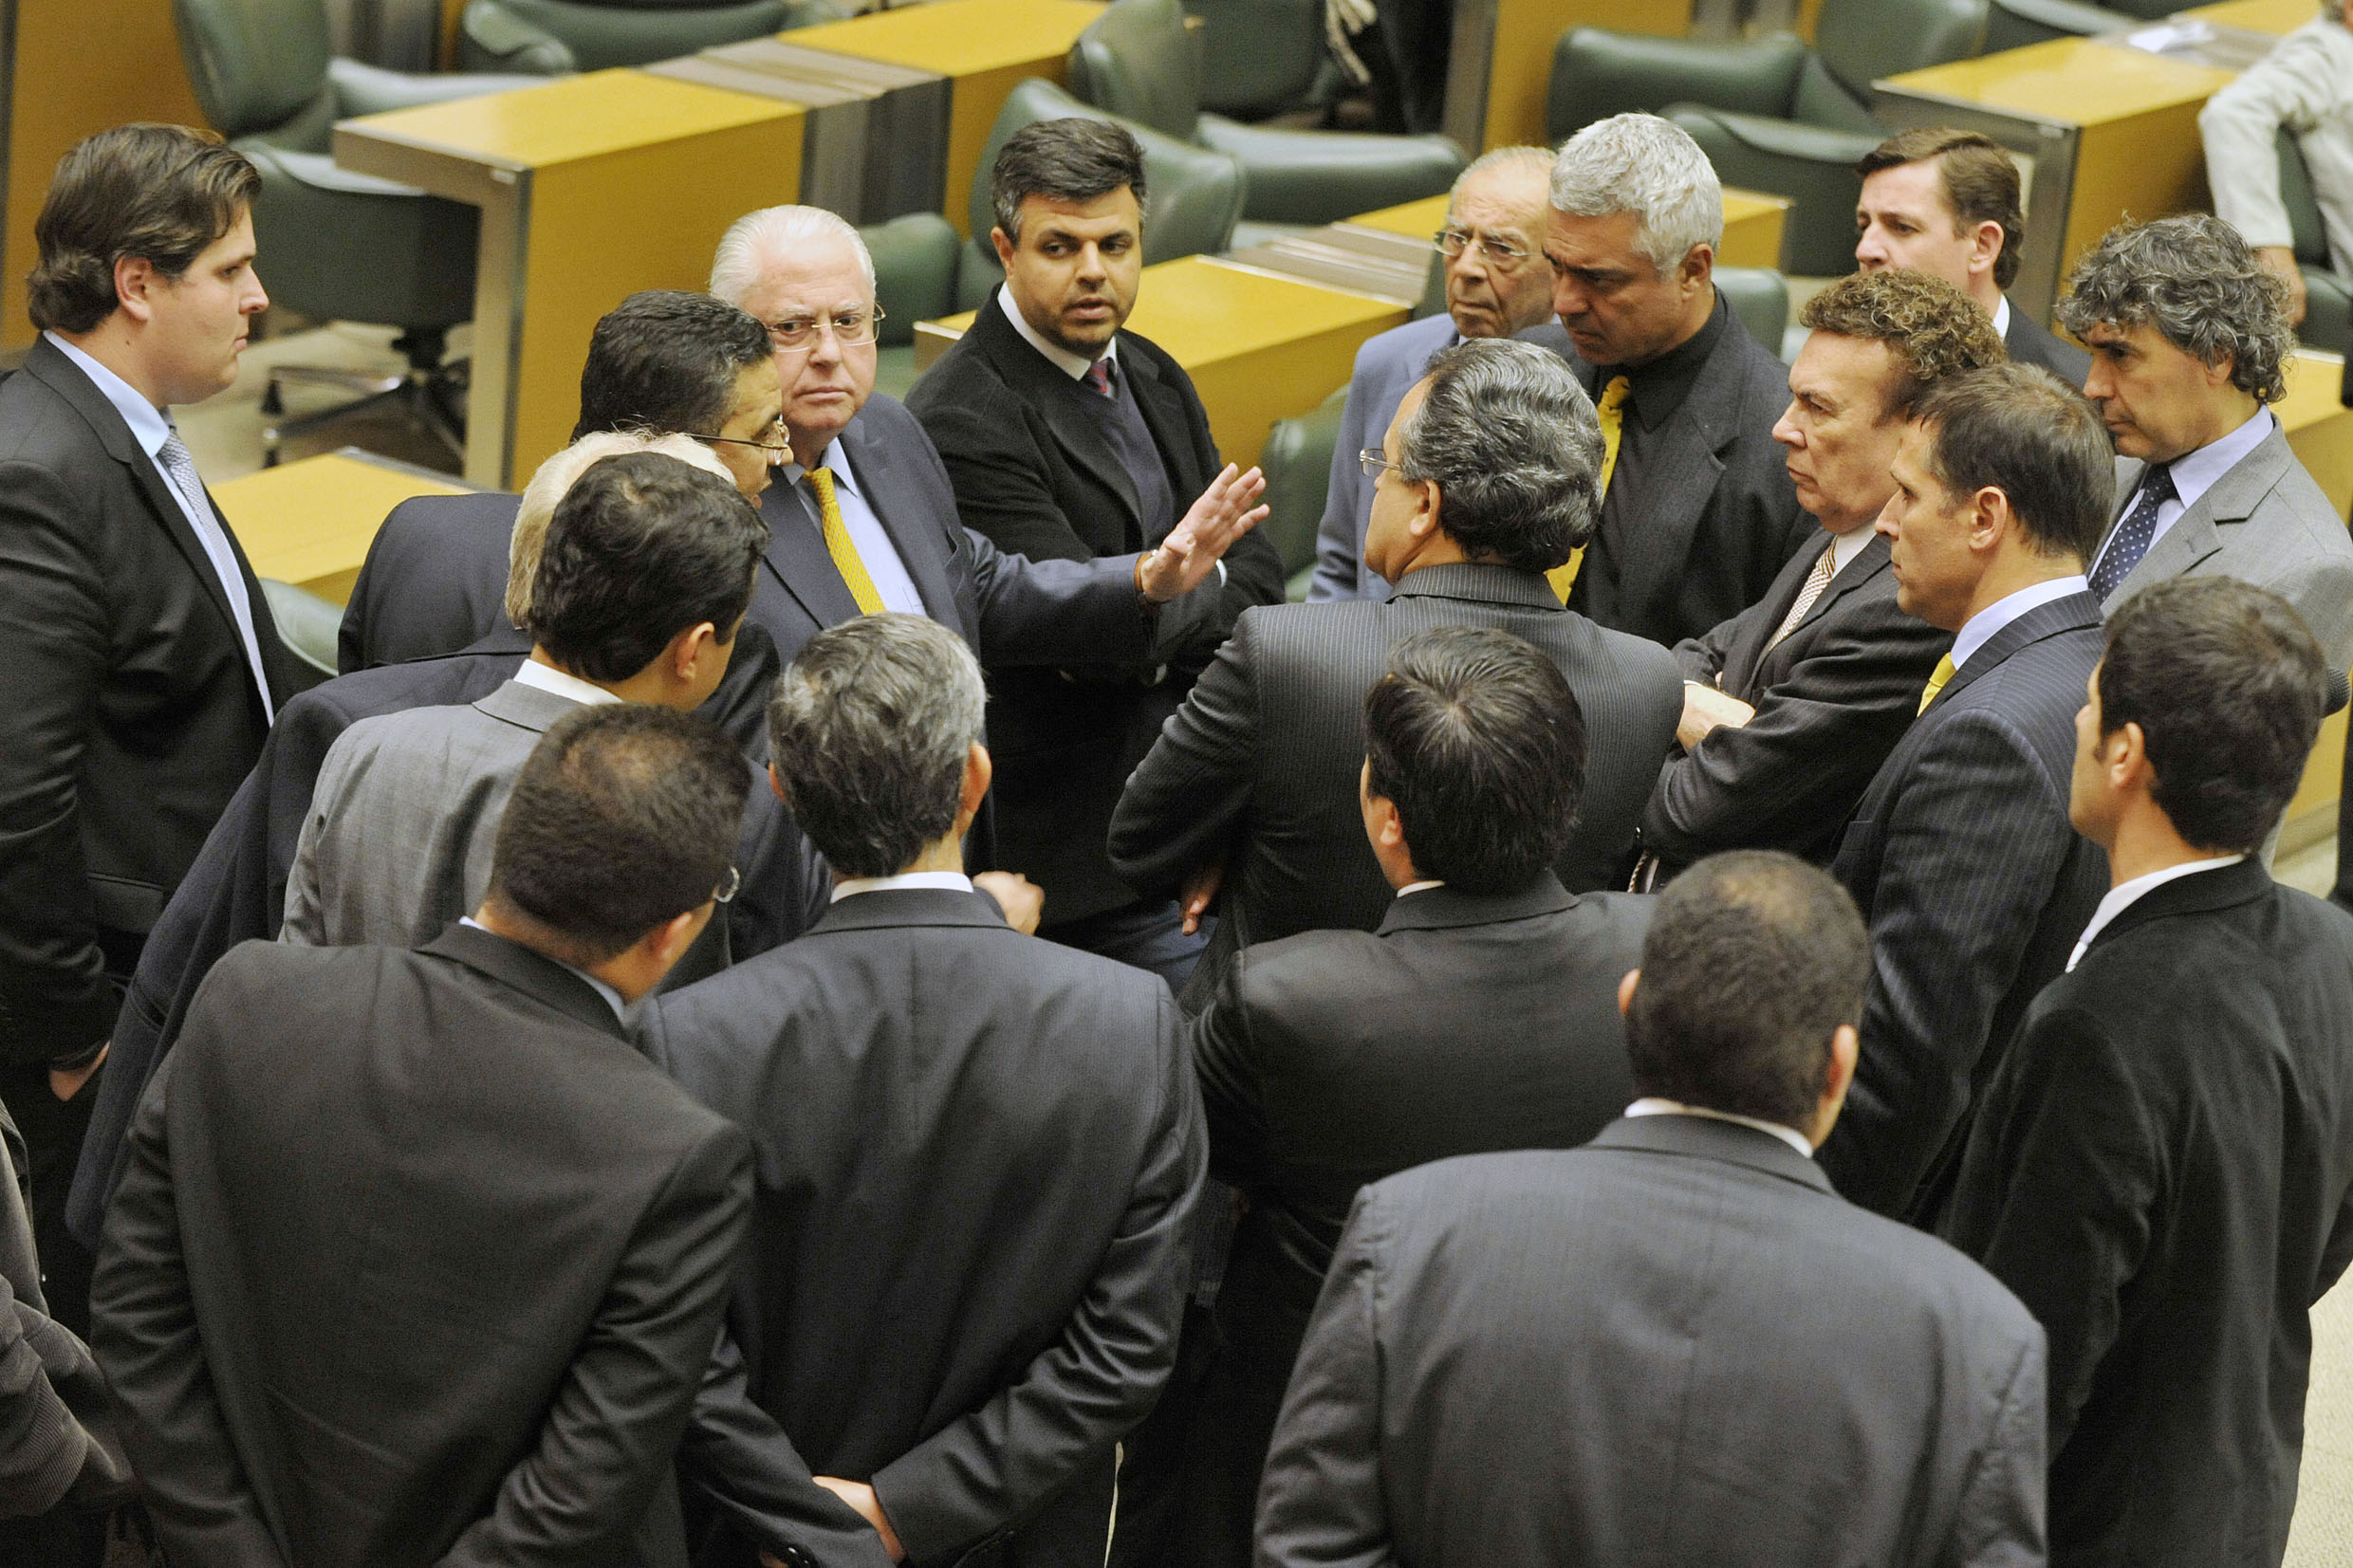 Parlamentares no plenrio JK <a style='float:right;color:#ccc' href='https://www3.al.sp.gov.br/repositorio/noticia/N-06-2014/fg163221.jpg' target=_blank><i class='bi bi-zoom-in'></i> Clique para ver a imagem </a>